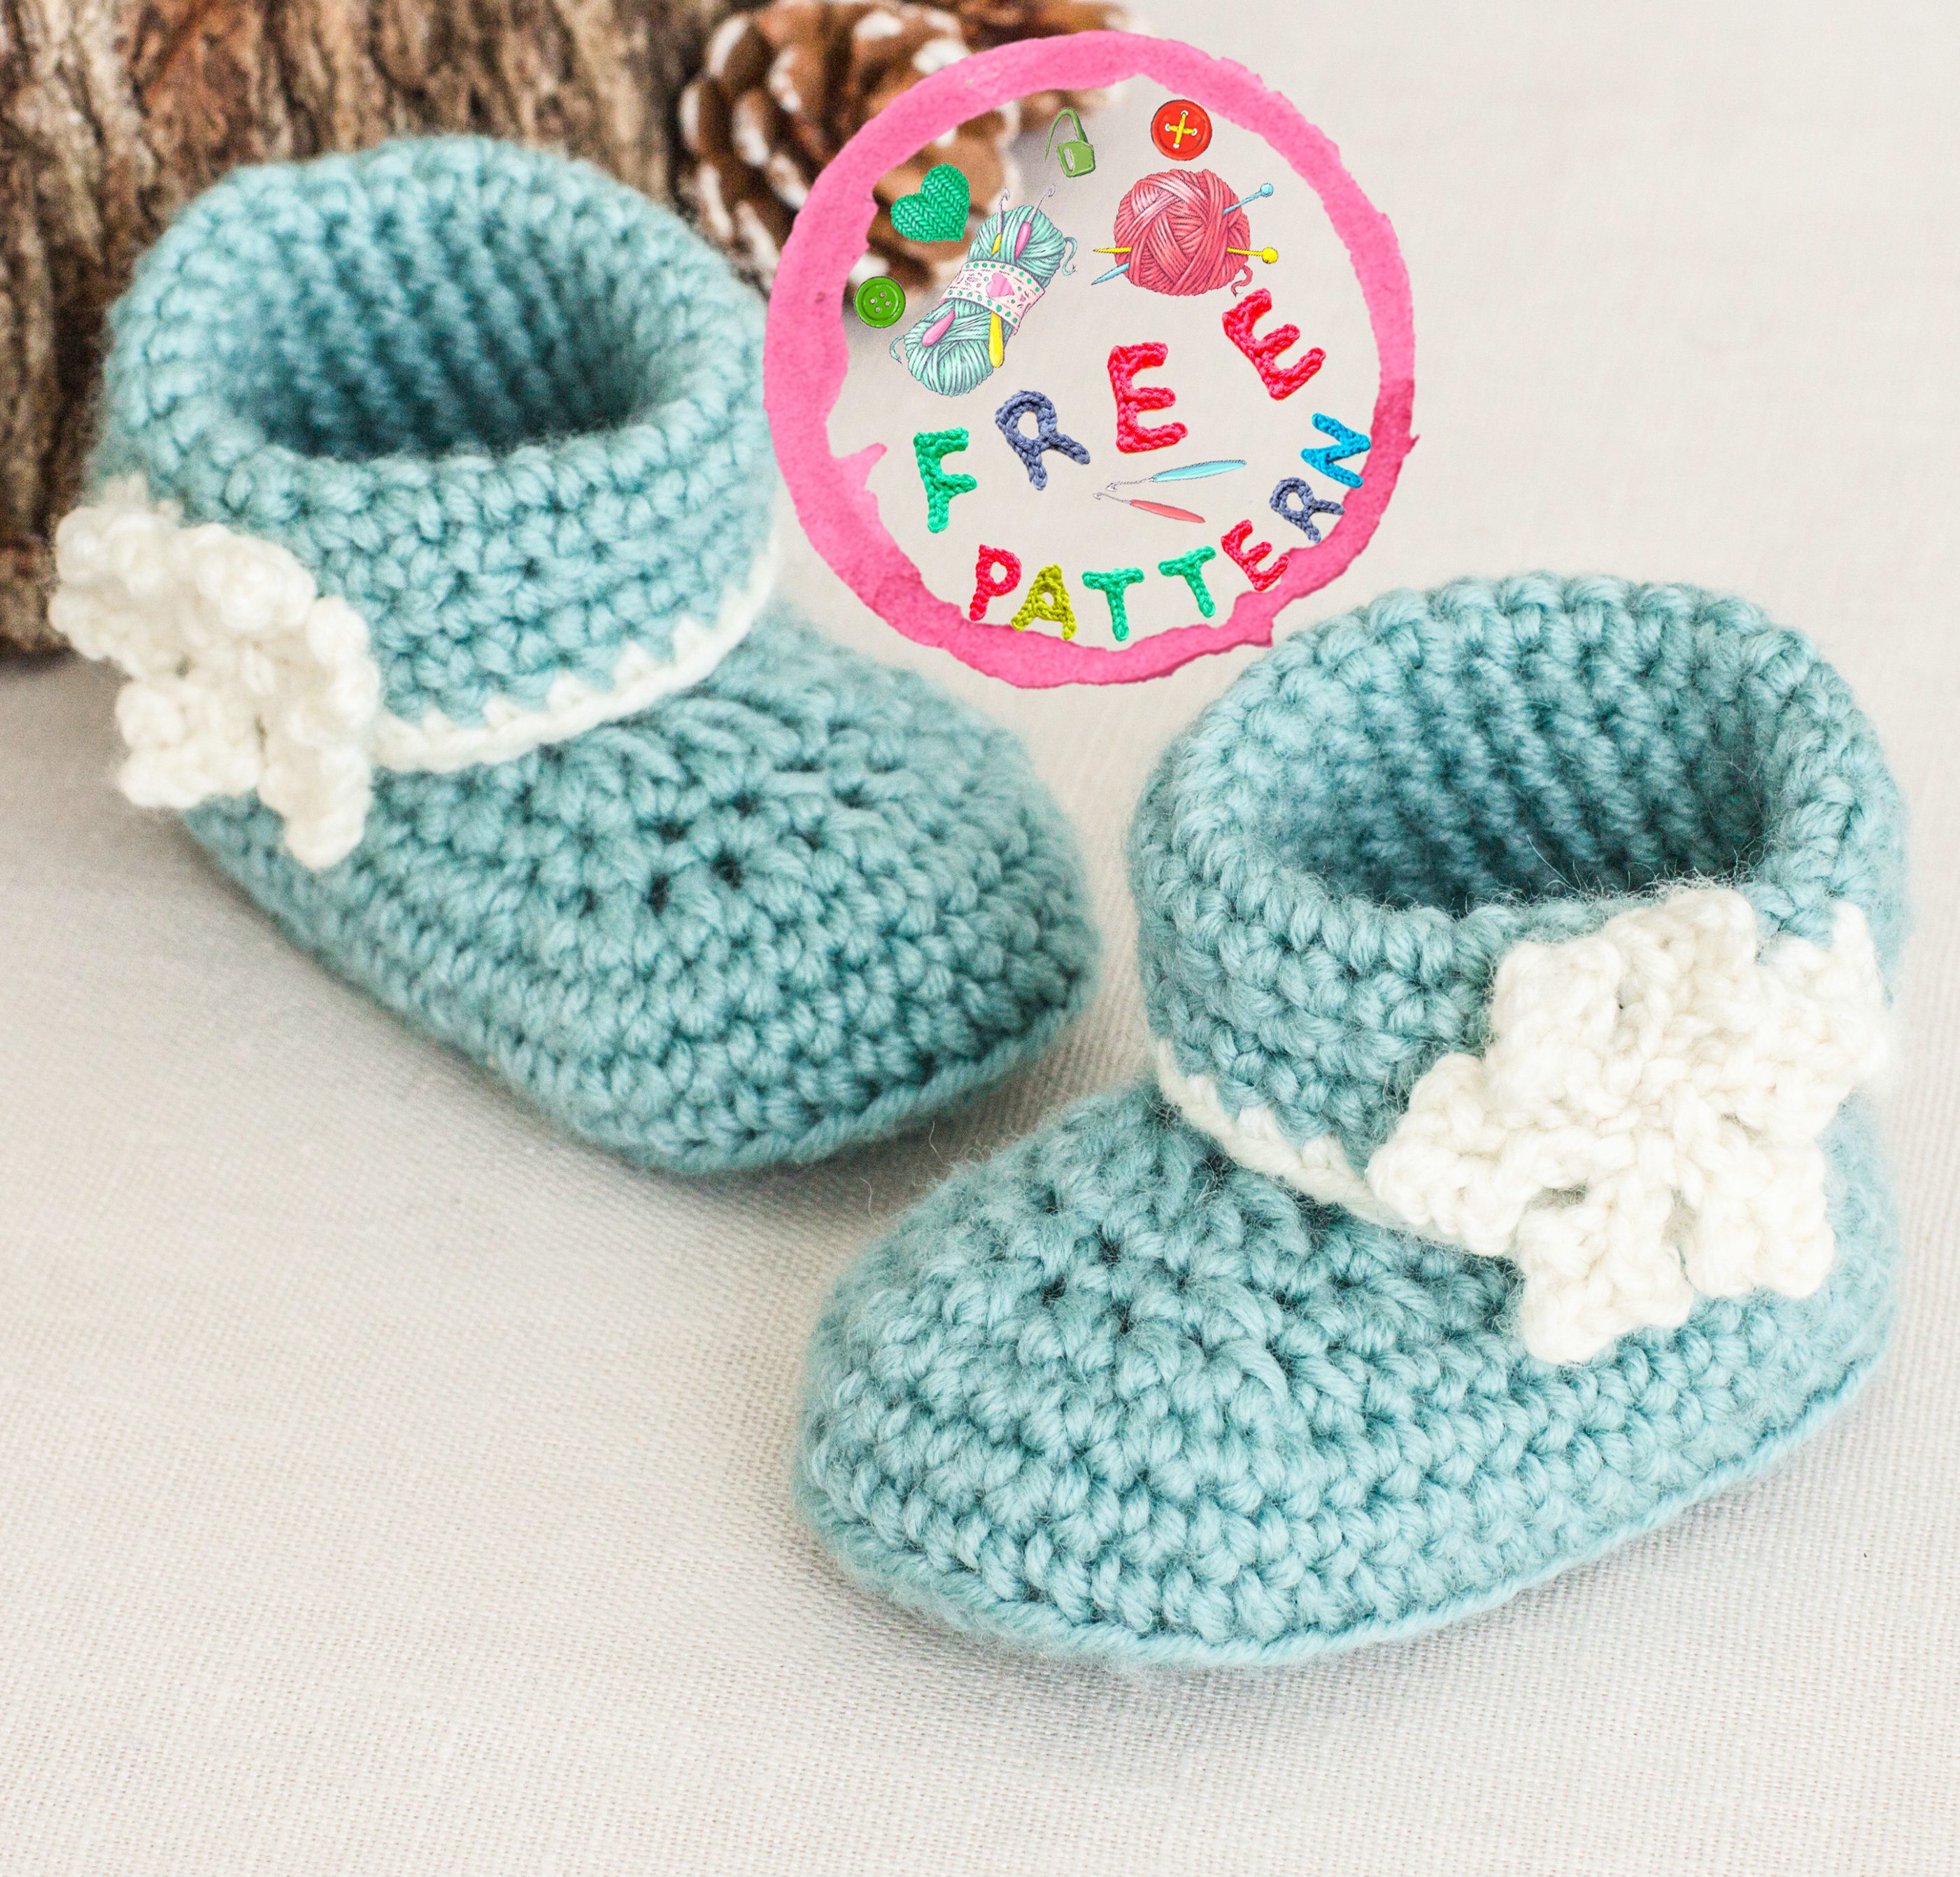 WINTER WONDERLAND BABY BOOTIES Free Crochet Pattern Hotcrochet Com